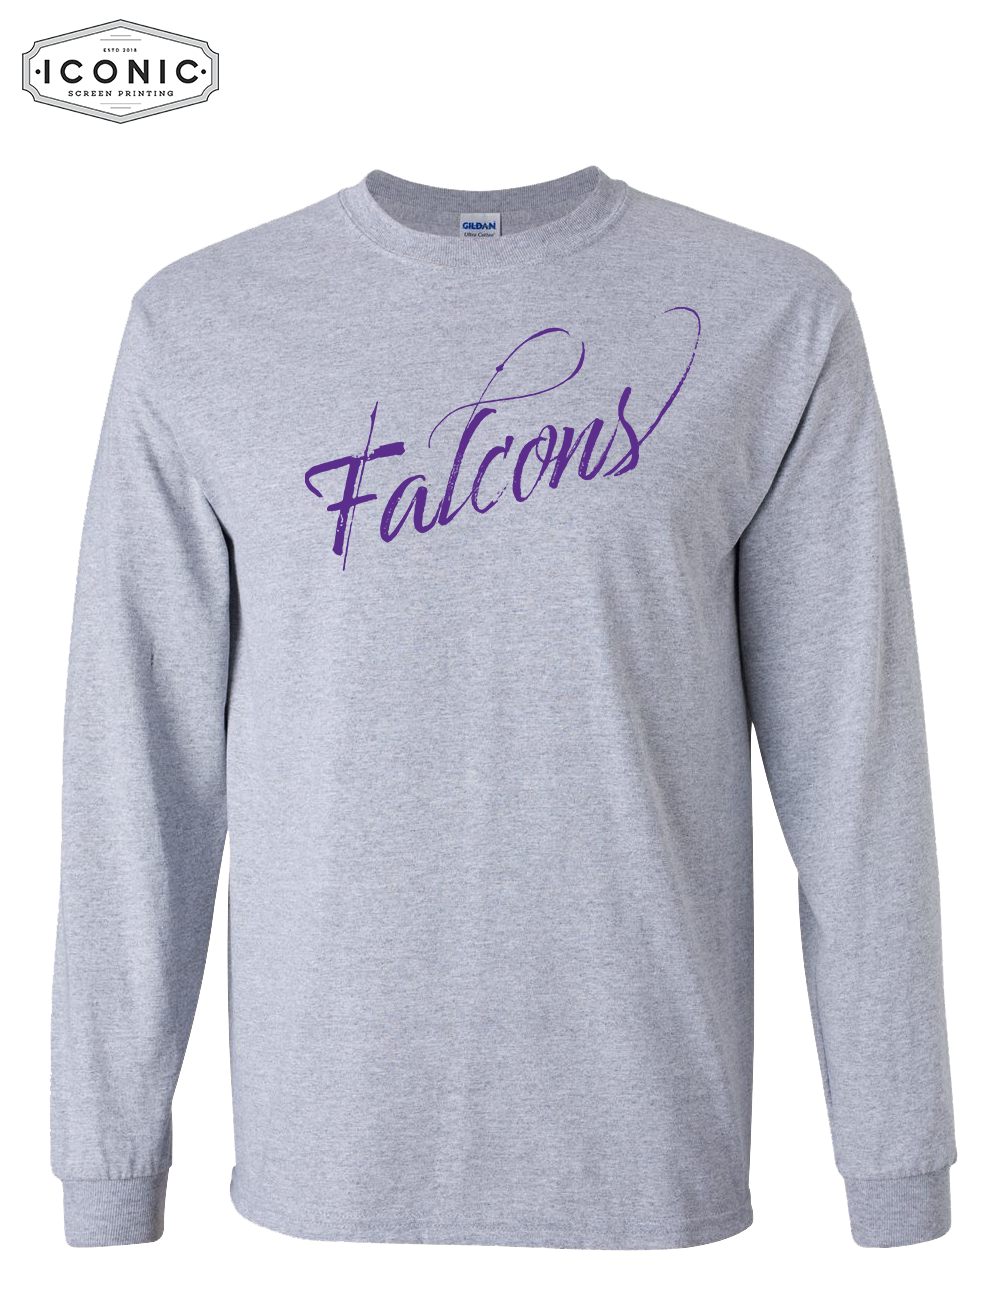 Falcons Script - Ultra Cotton Long Sleeve